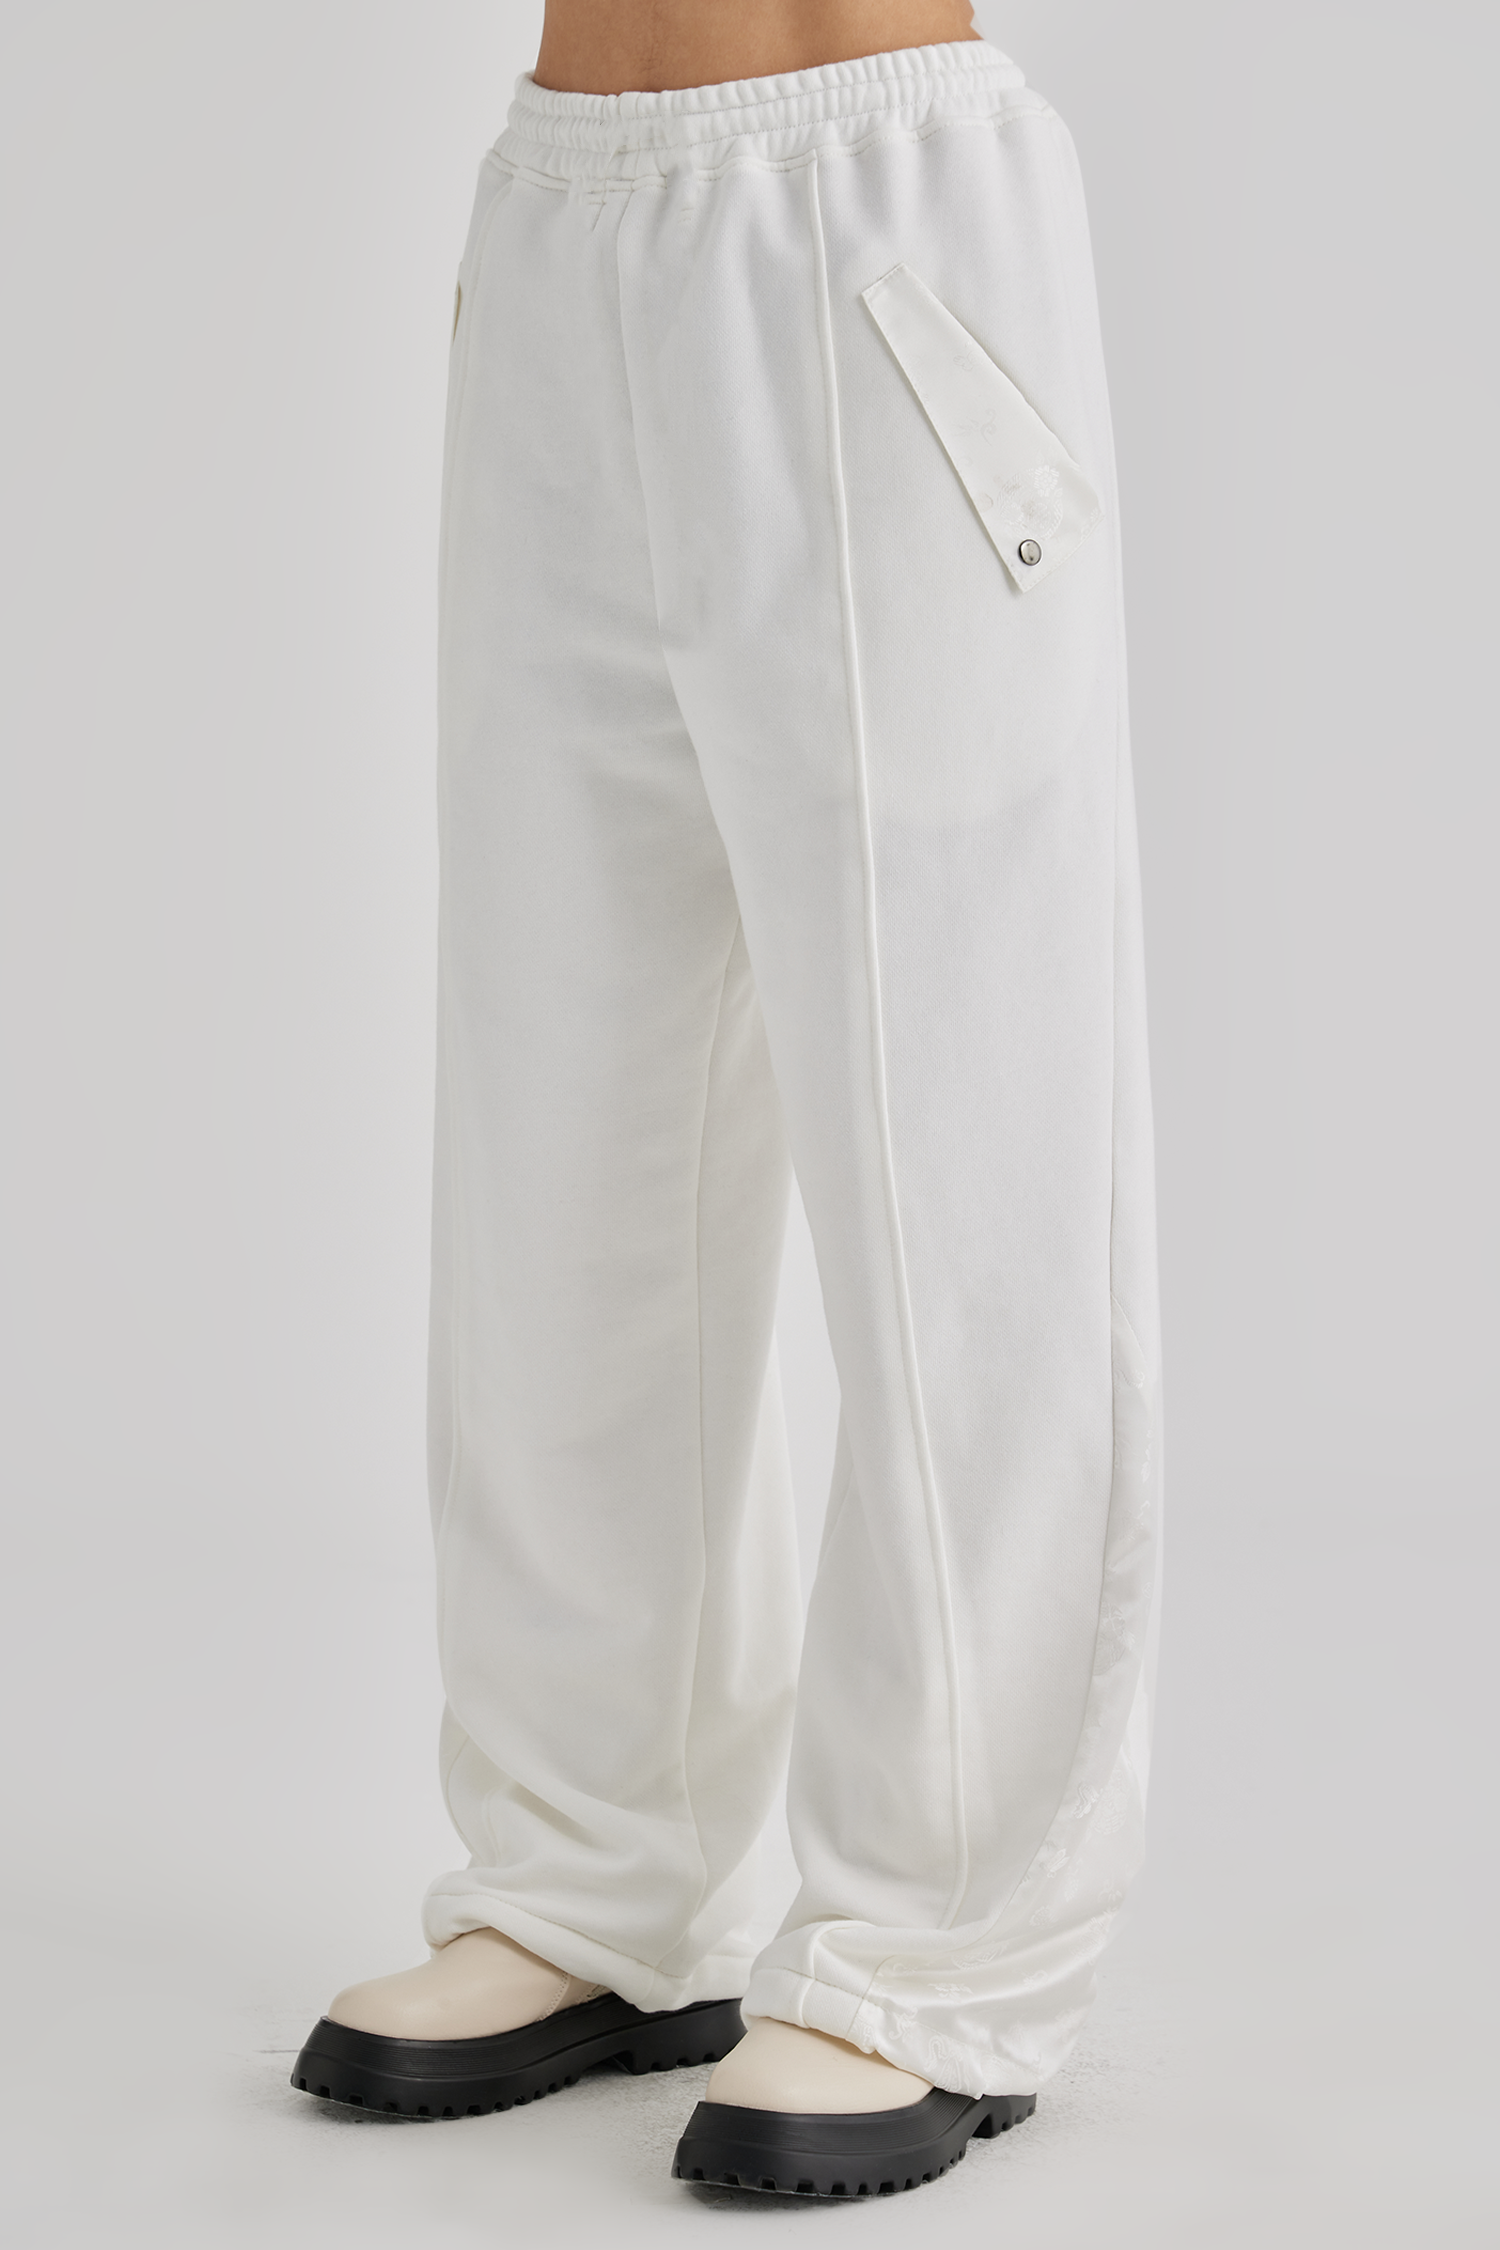 Tuck Hanbok Sweat Pants (White)